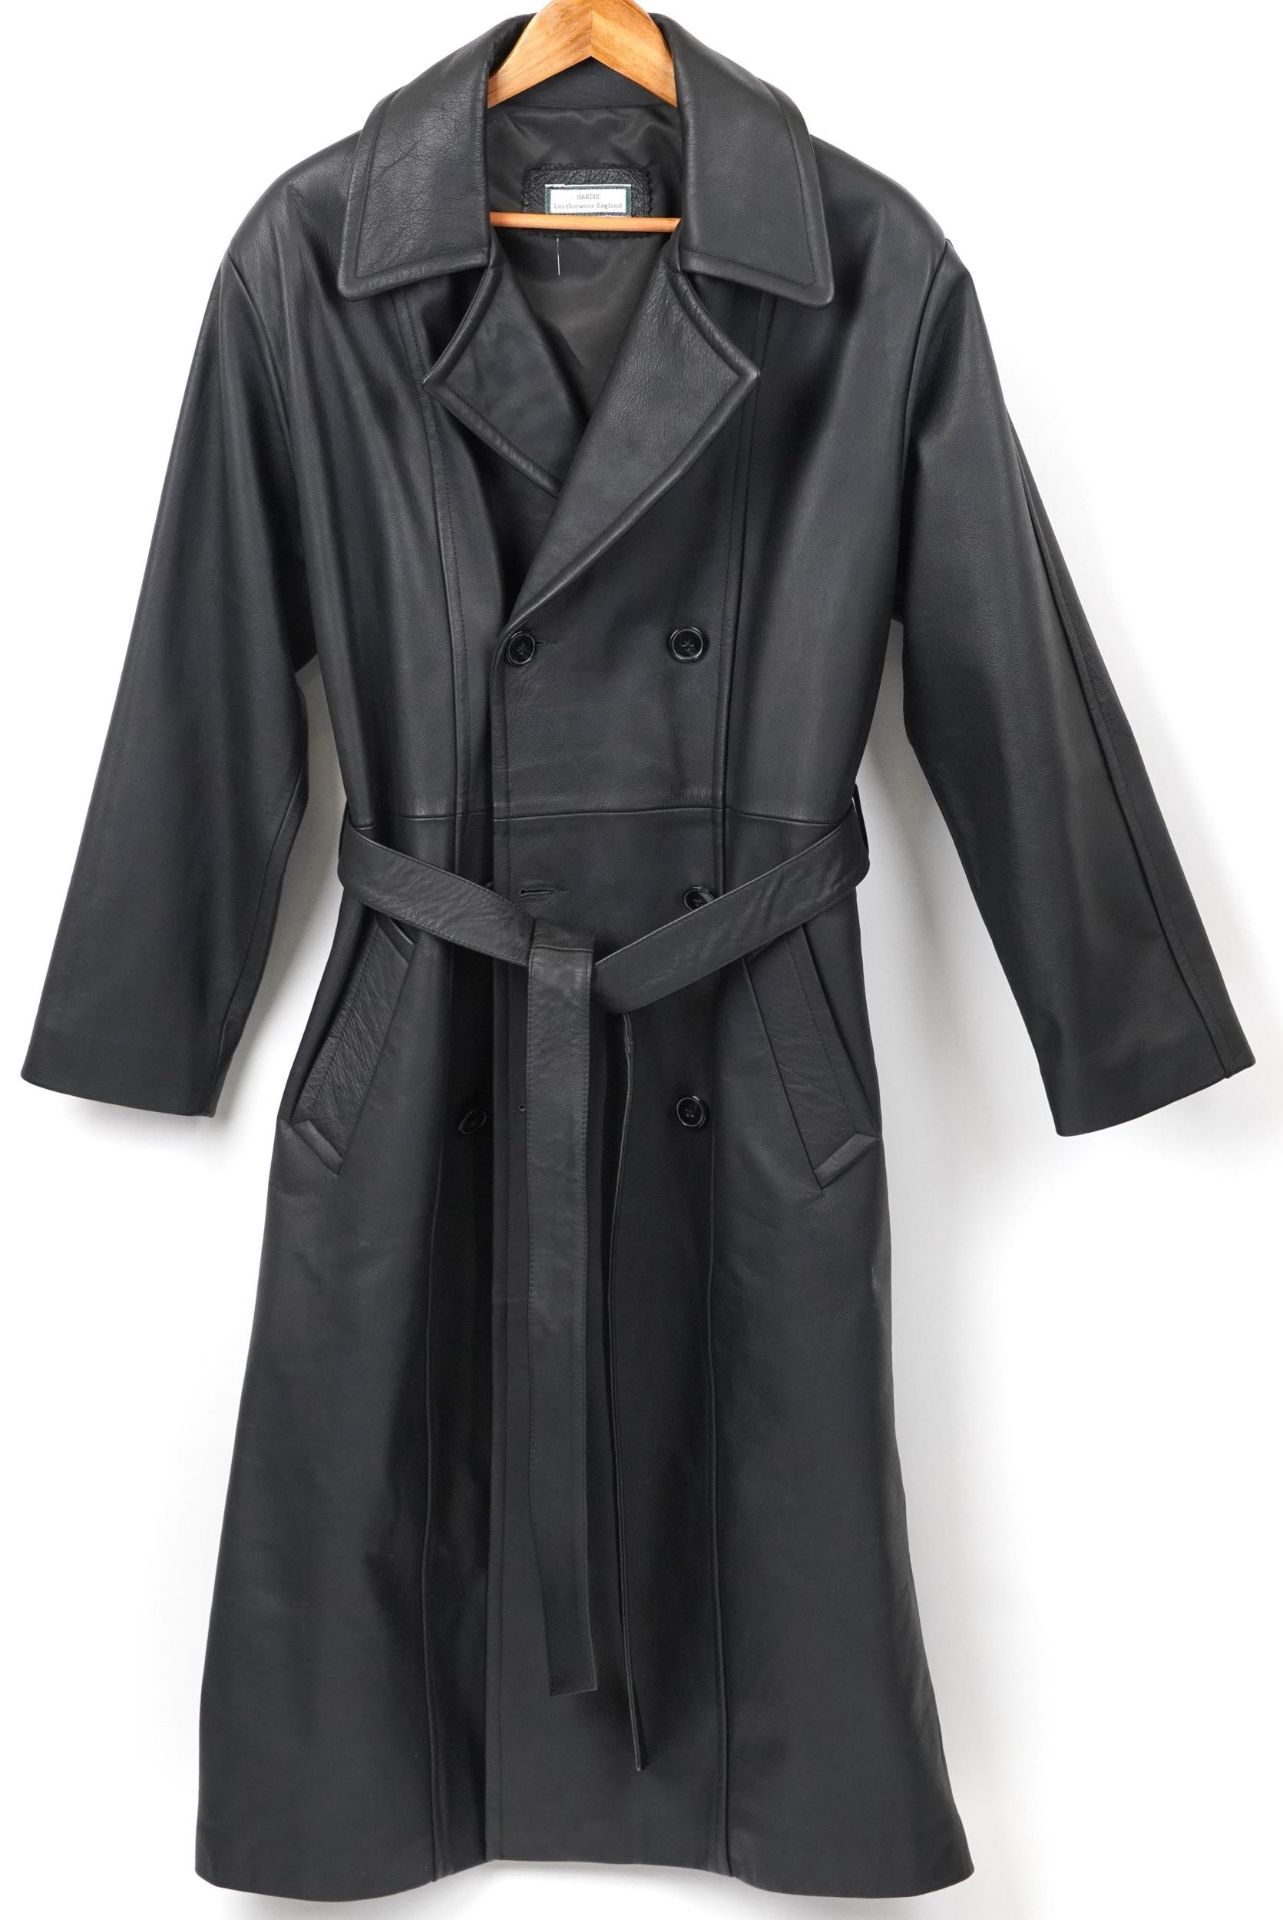 Gentlemen's Hardix full length leather coat, size Small